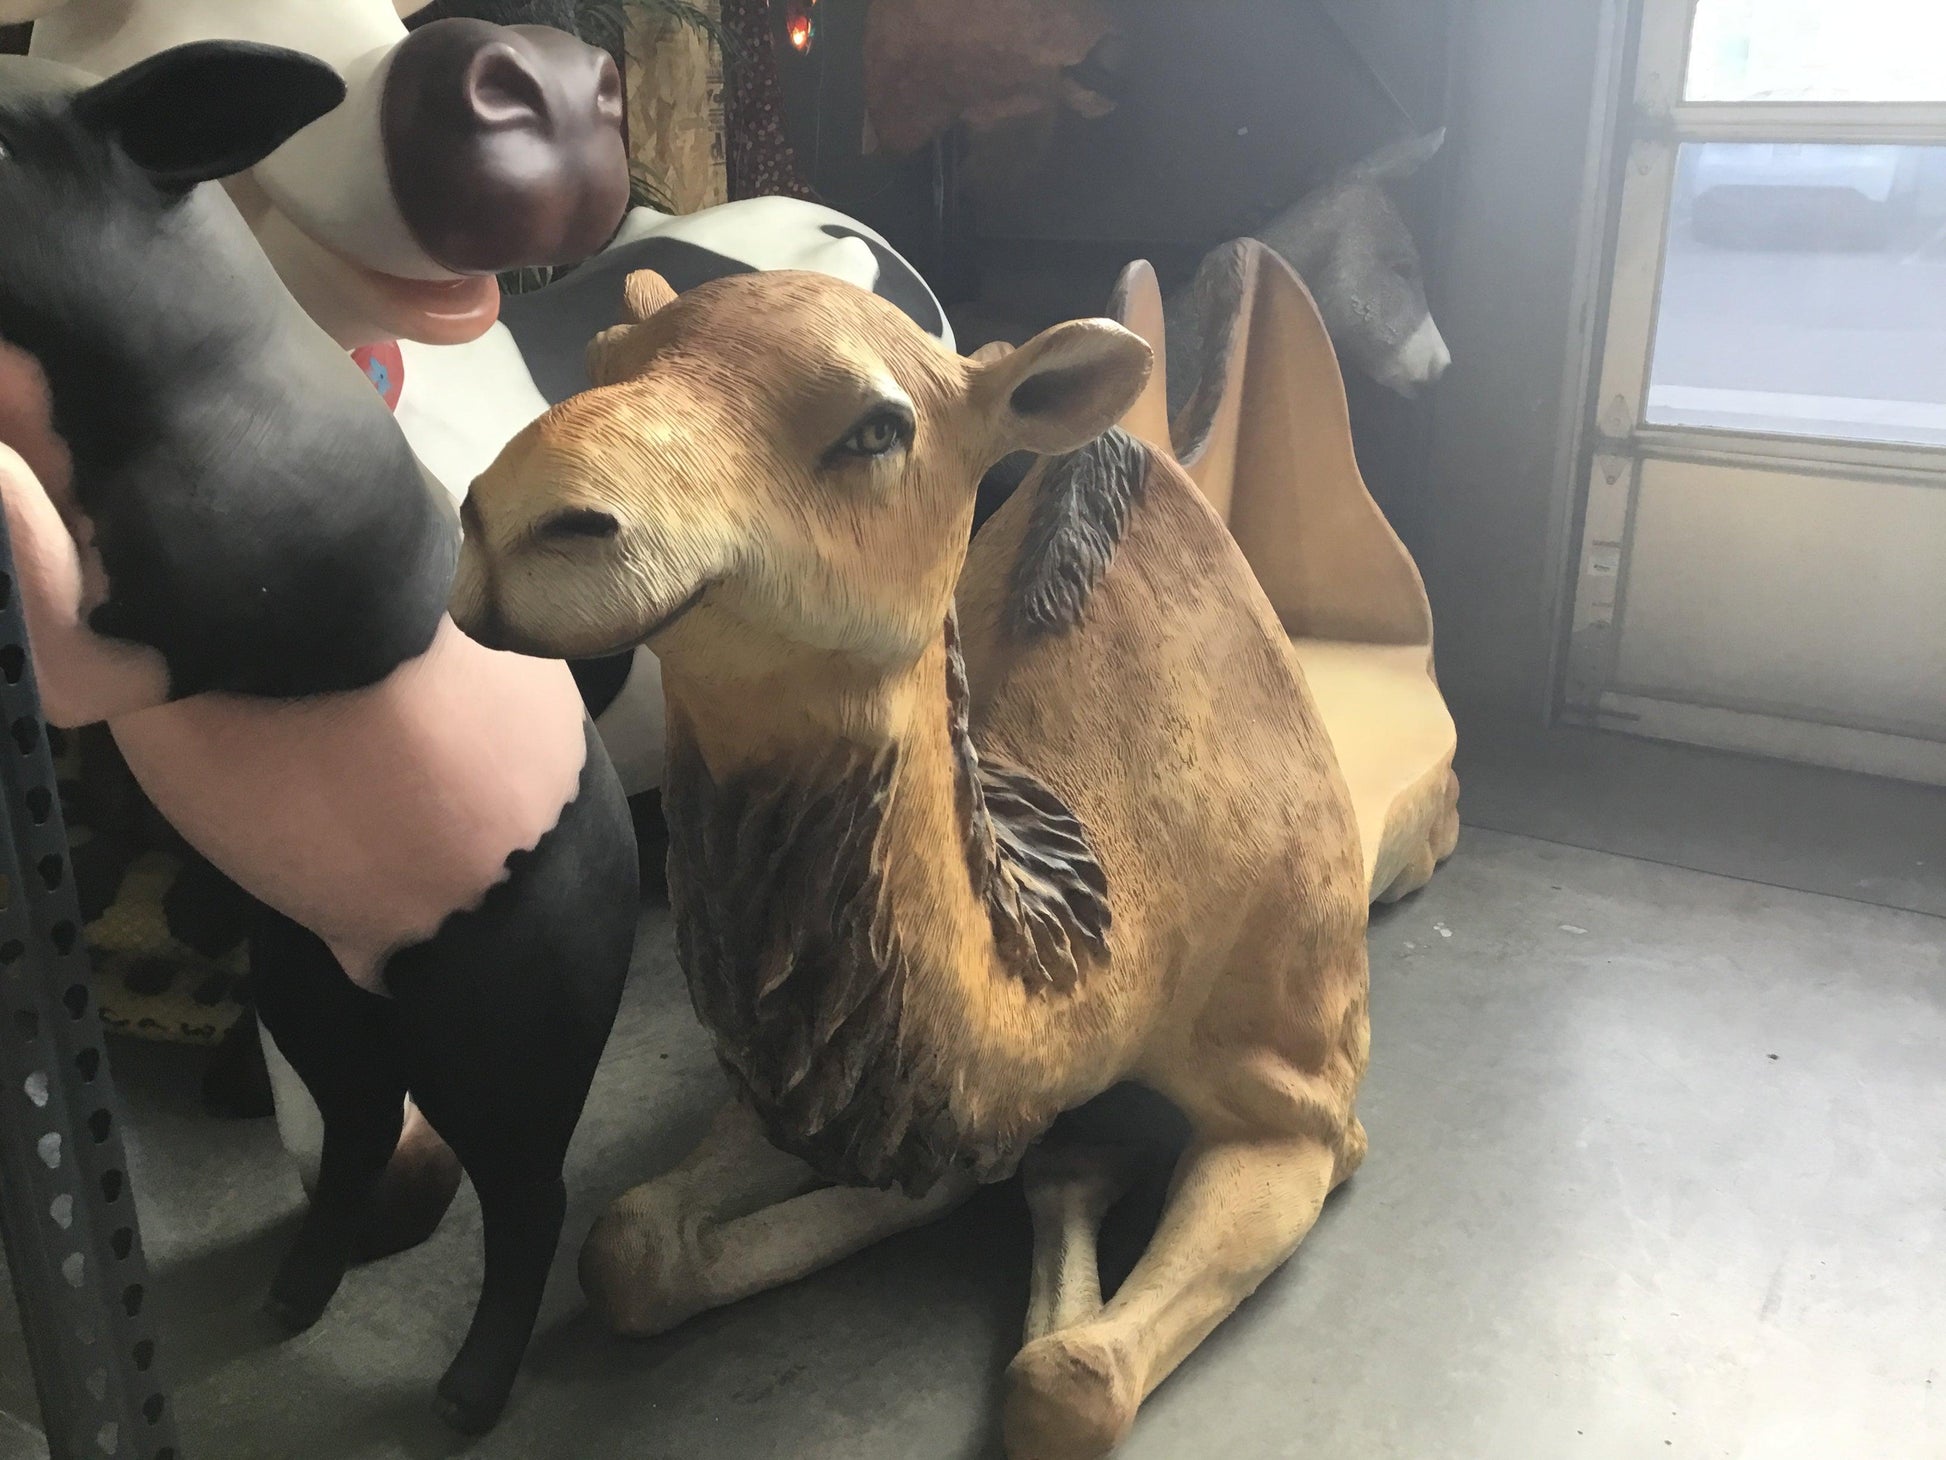 Camel Bench Statue - LM Treasures Prop Rentals 